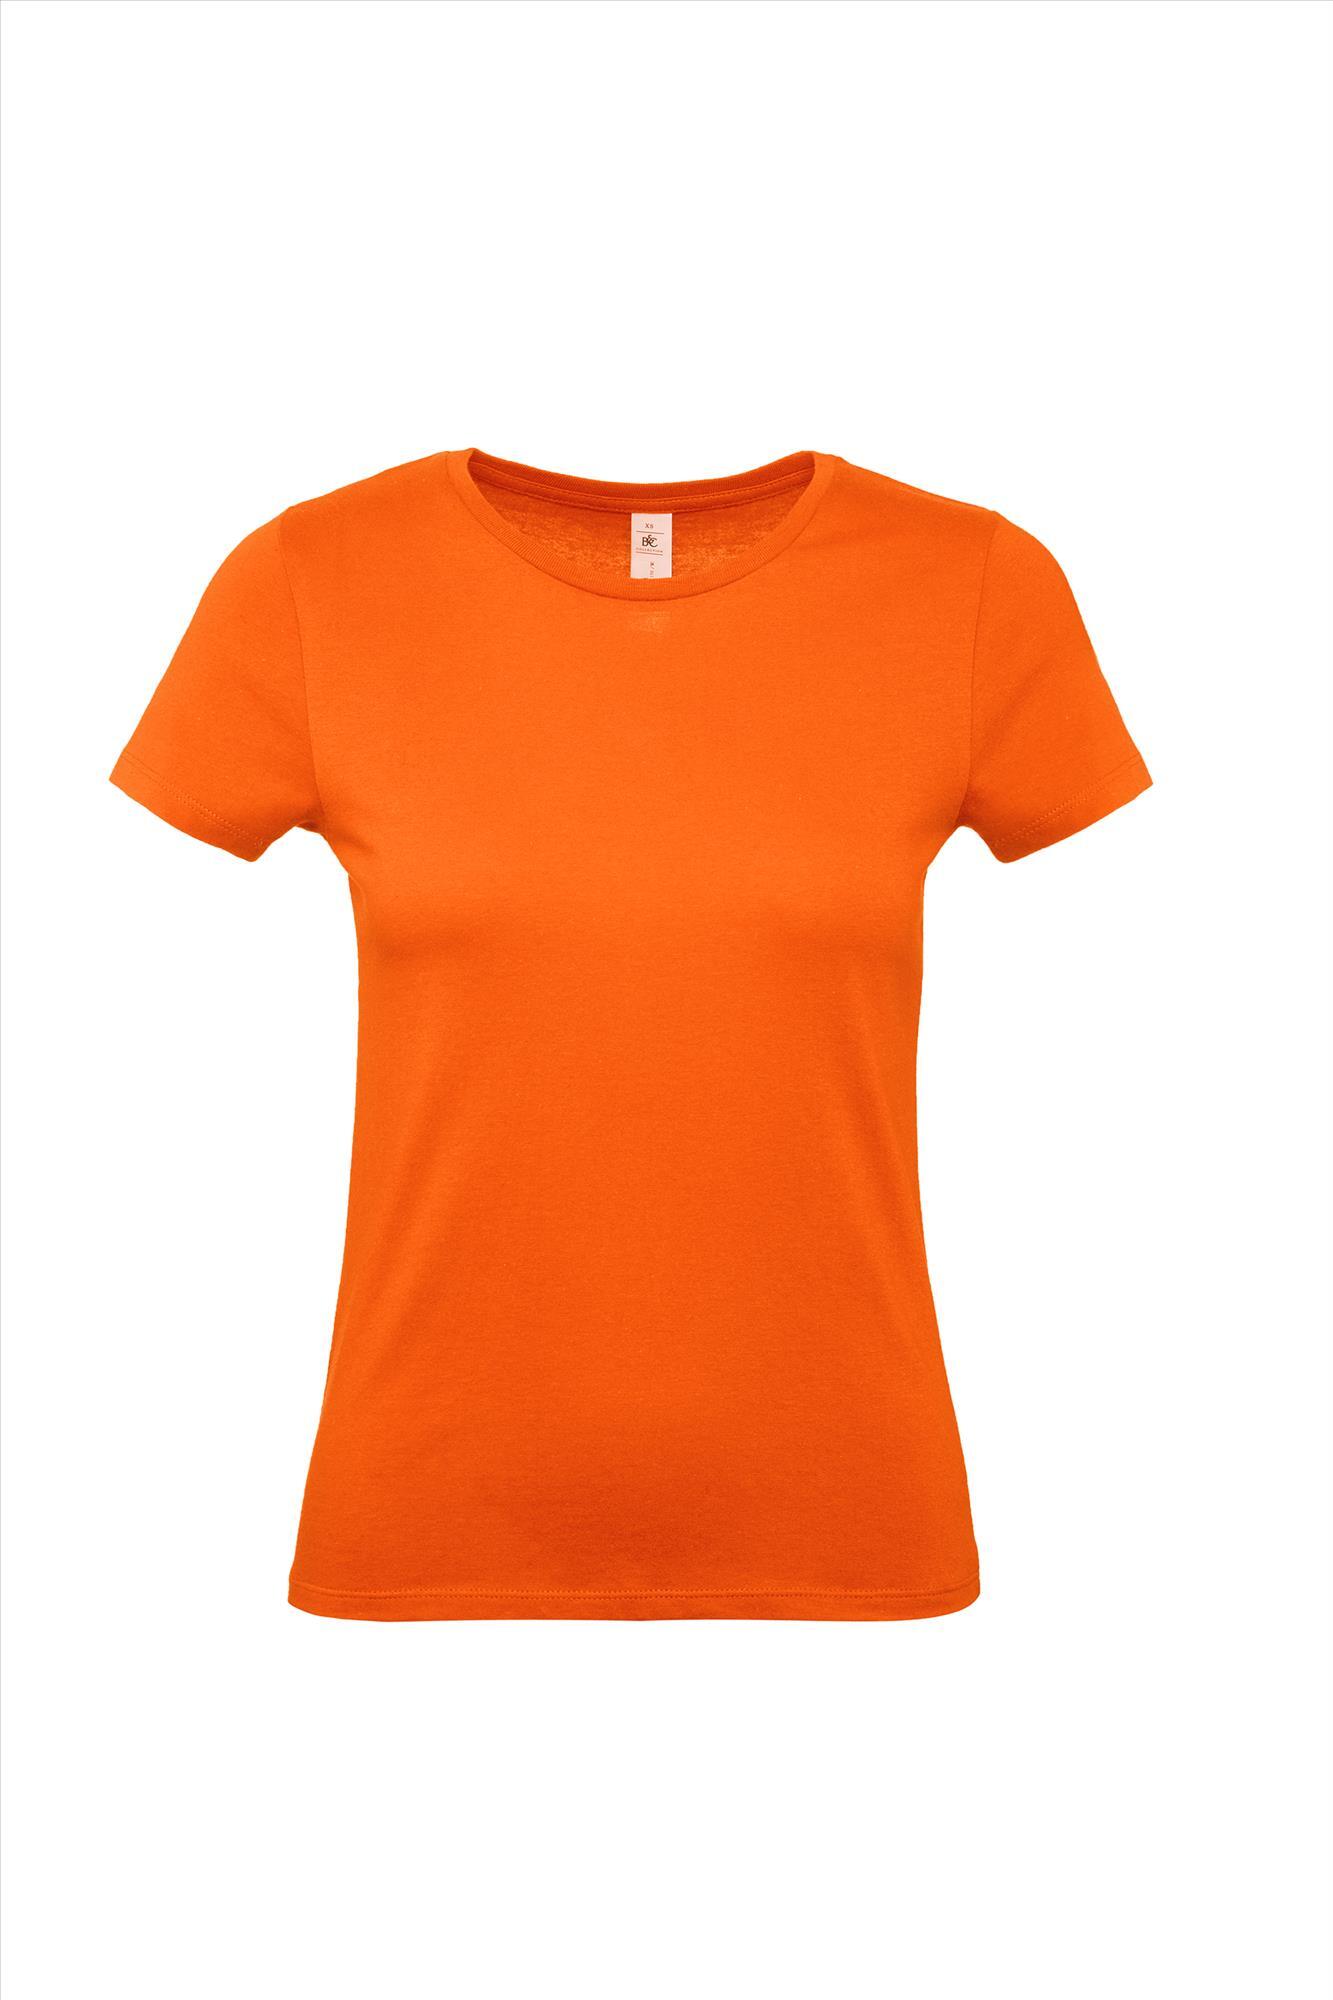 Modern T-shirt voor haar dames shirt oranje koningsdag